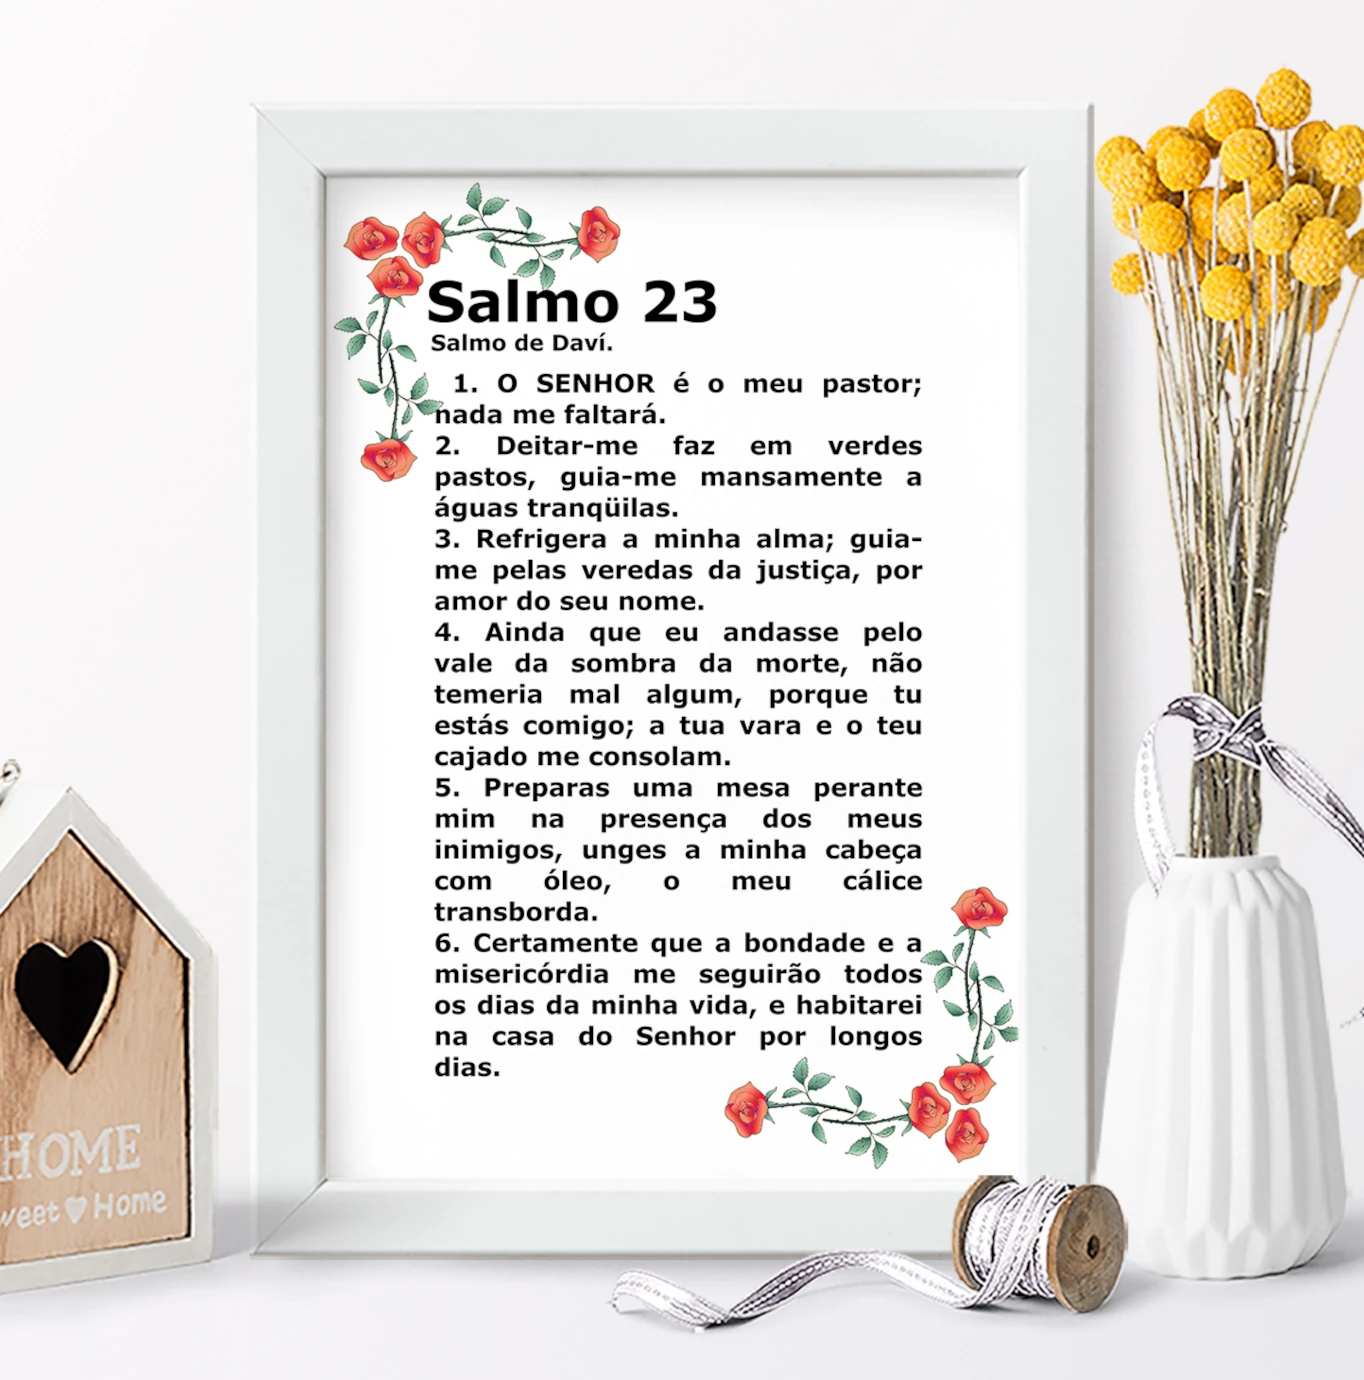 BIBLIOLOGIA DO SALMO 23